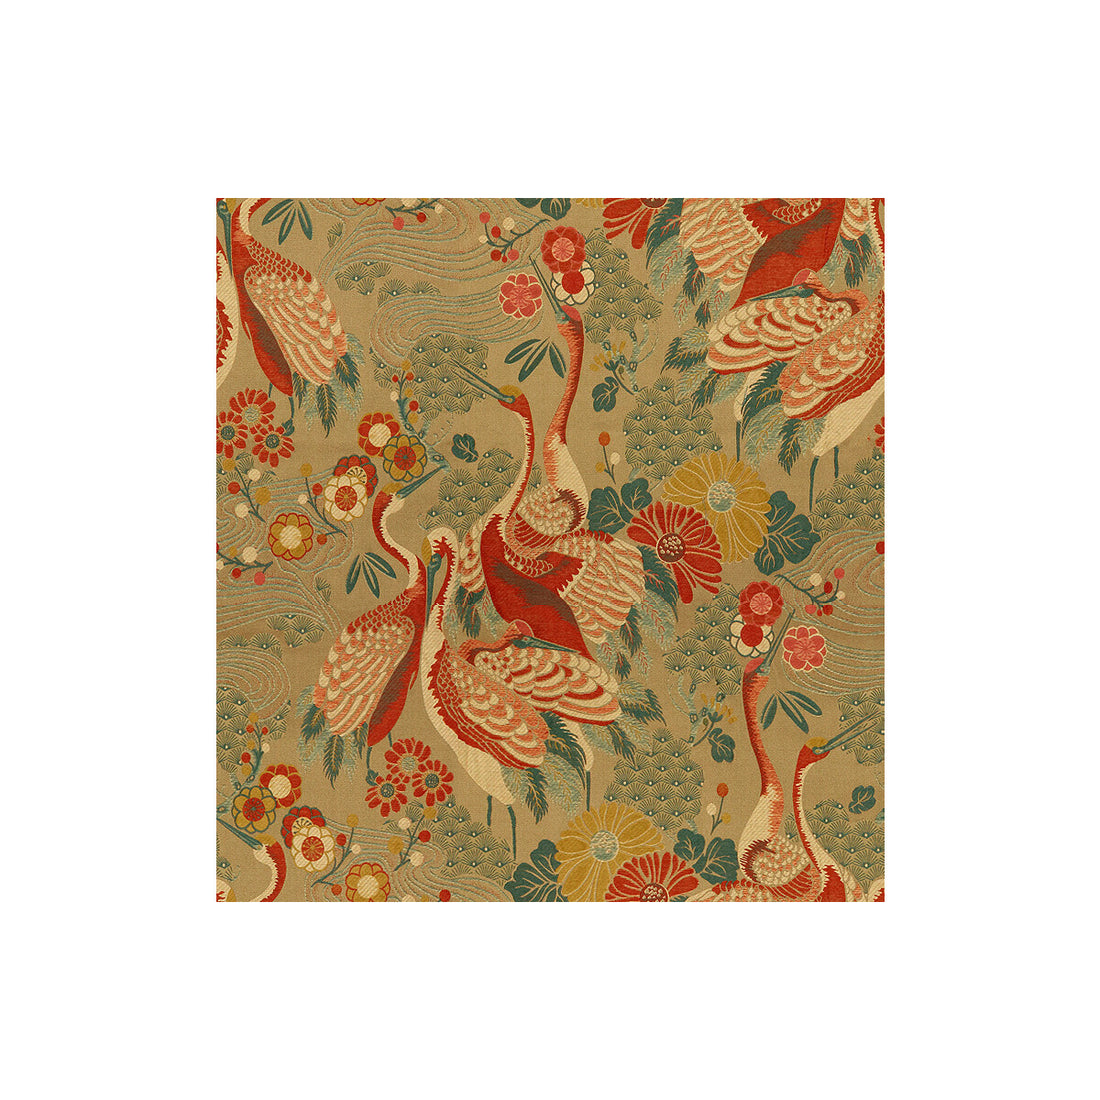 Kimono Inspired fabric in haute red color - pattern 32257.1216.0 - by Kravet Design